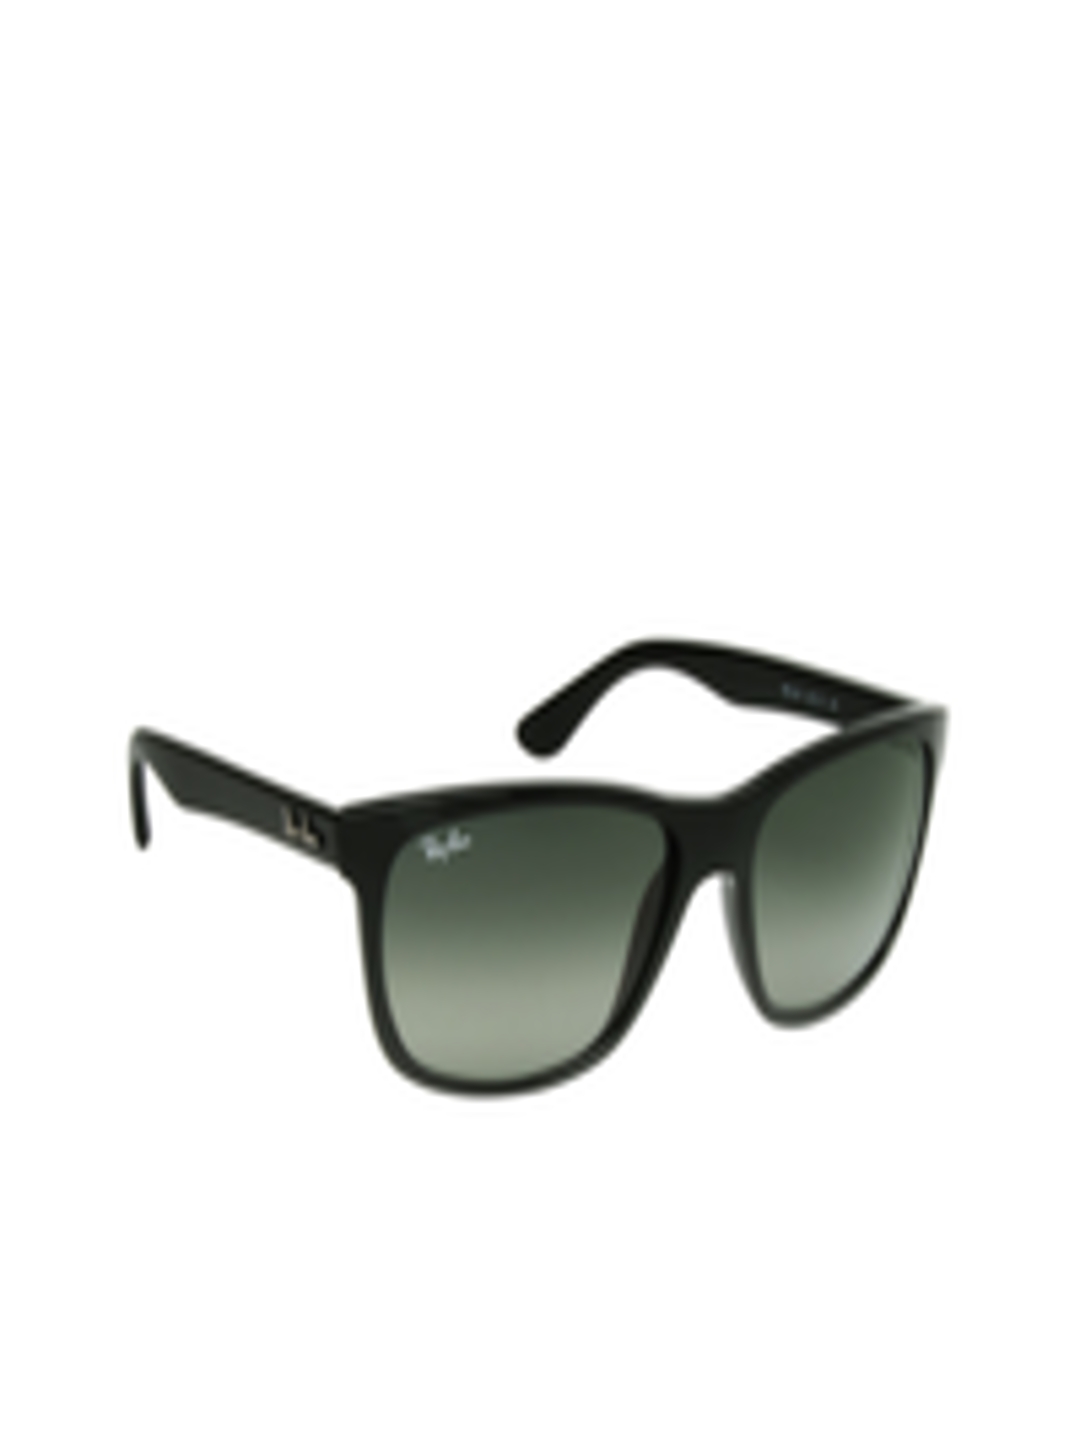 Buy Ray Ban Unisex Sunglasses 0RB4181 - Sunglasses for Unisex 255339